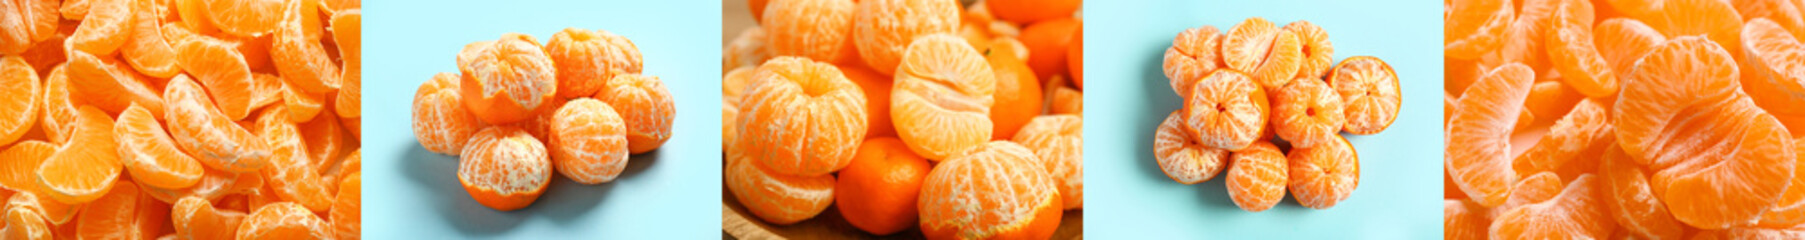 Collage of fresh peeled tangerines